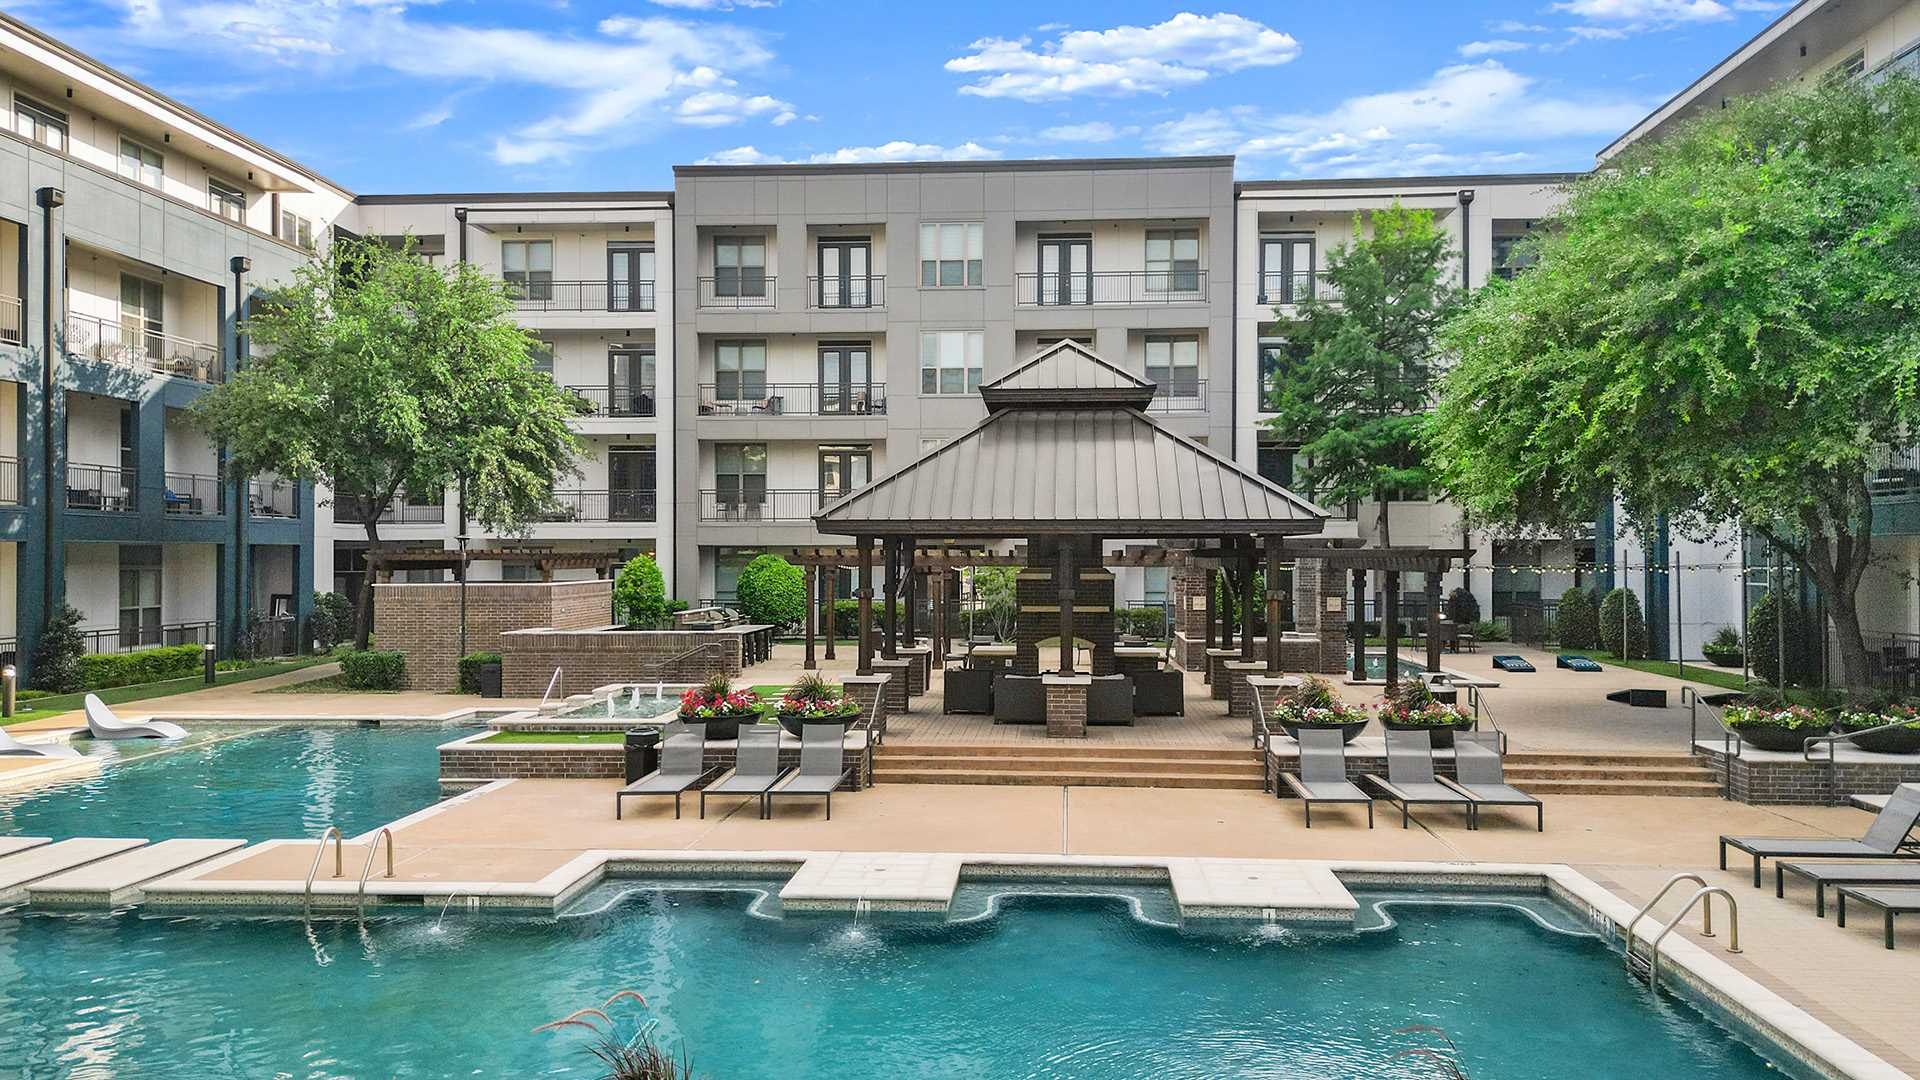 Strata swimming pool - Knox-Henderson Apartments in Dallas